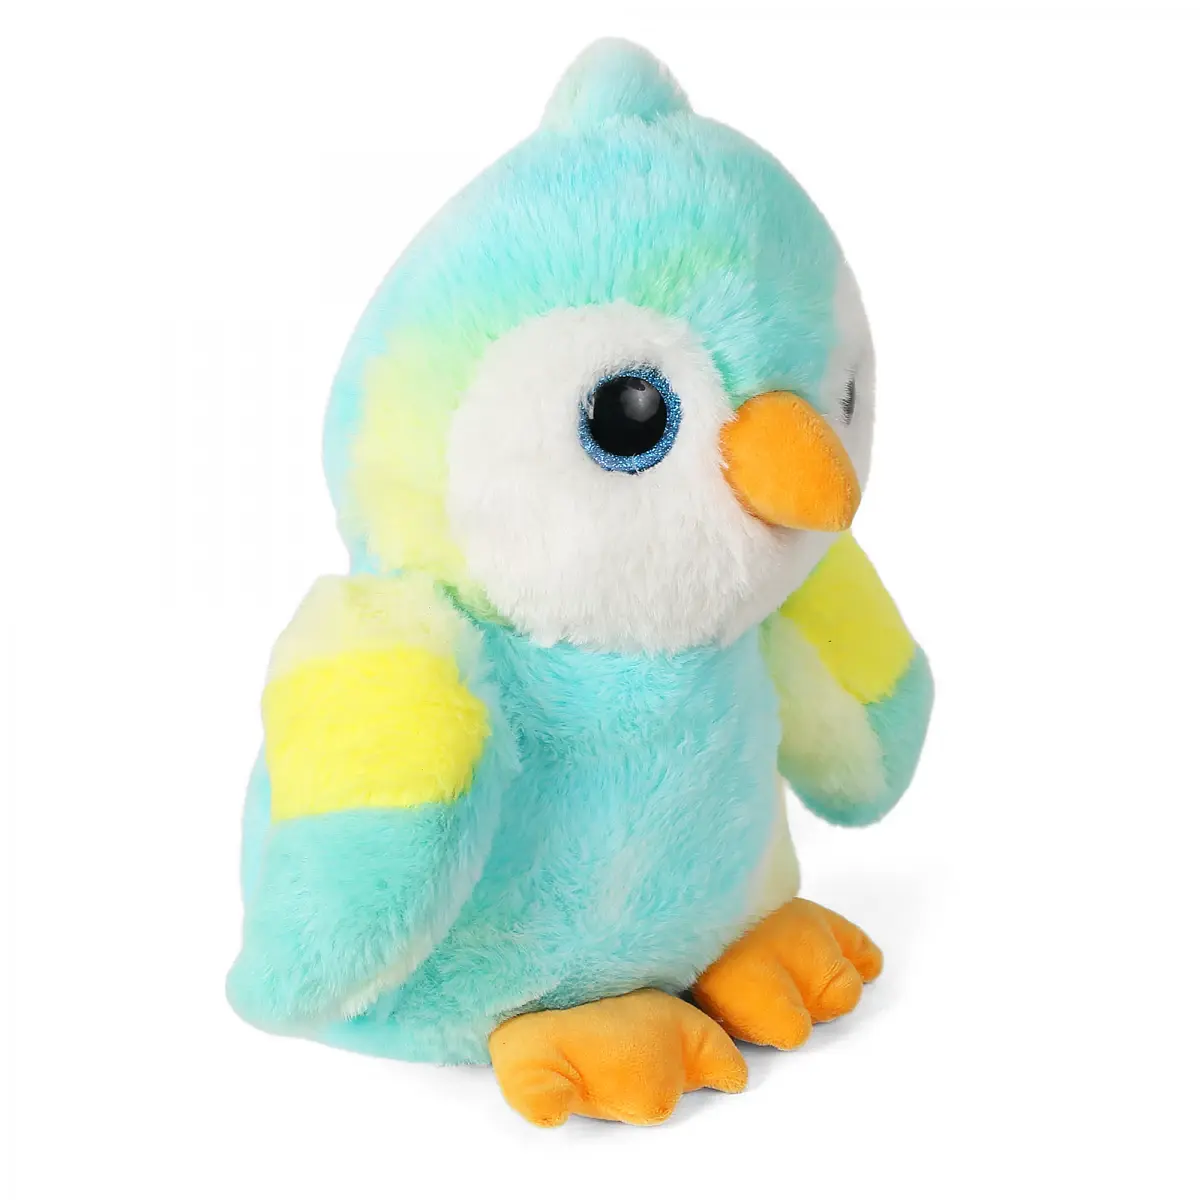 Mirada Penguin Soft Toys for Kids, 28cm, 3Y+, Green